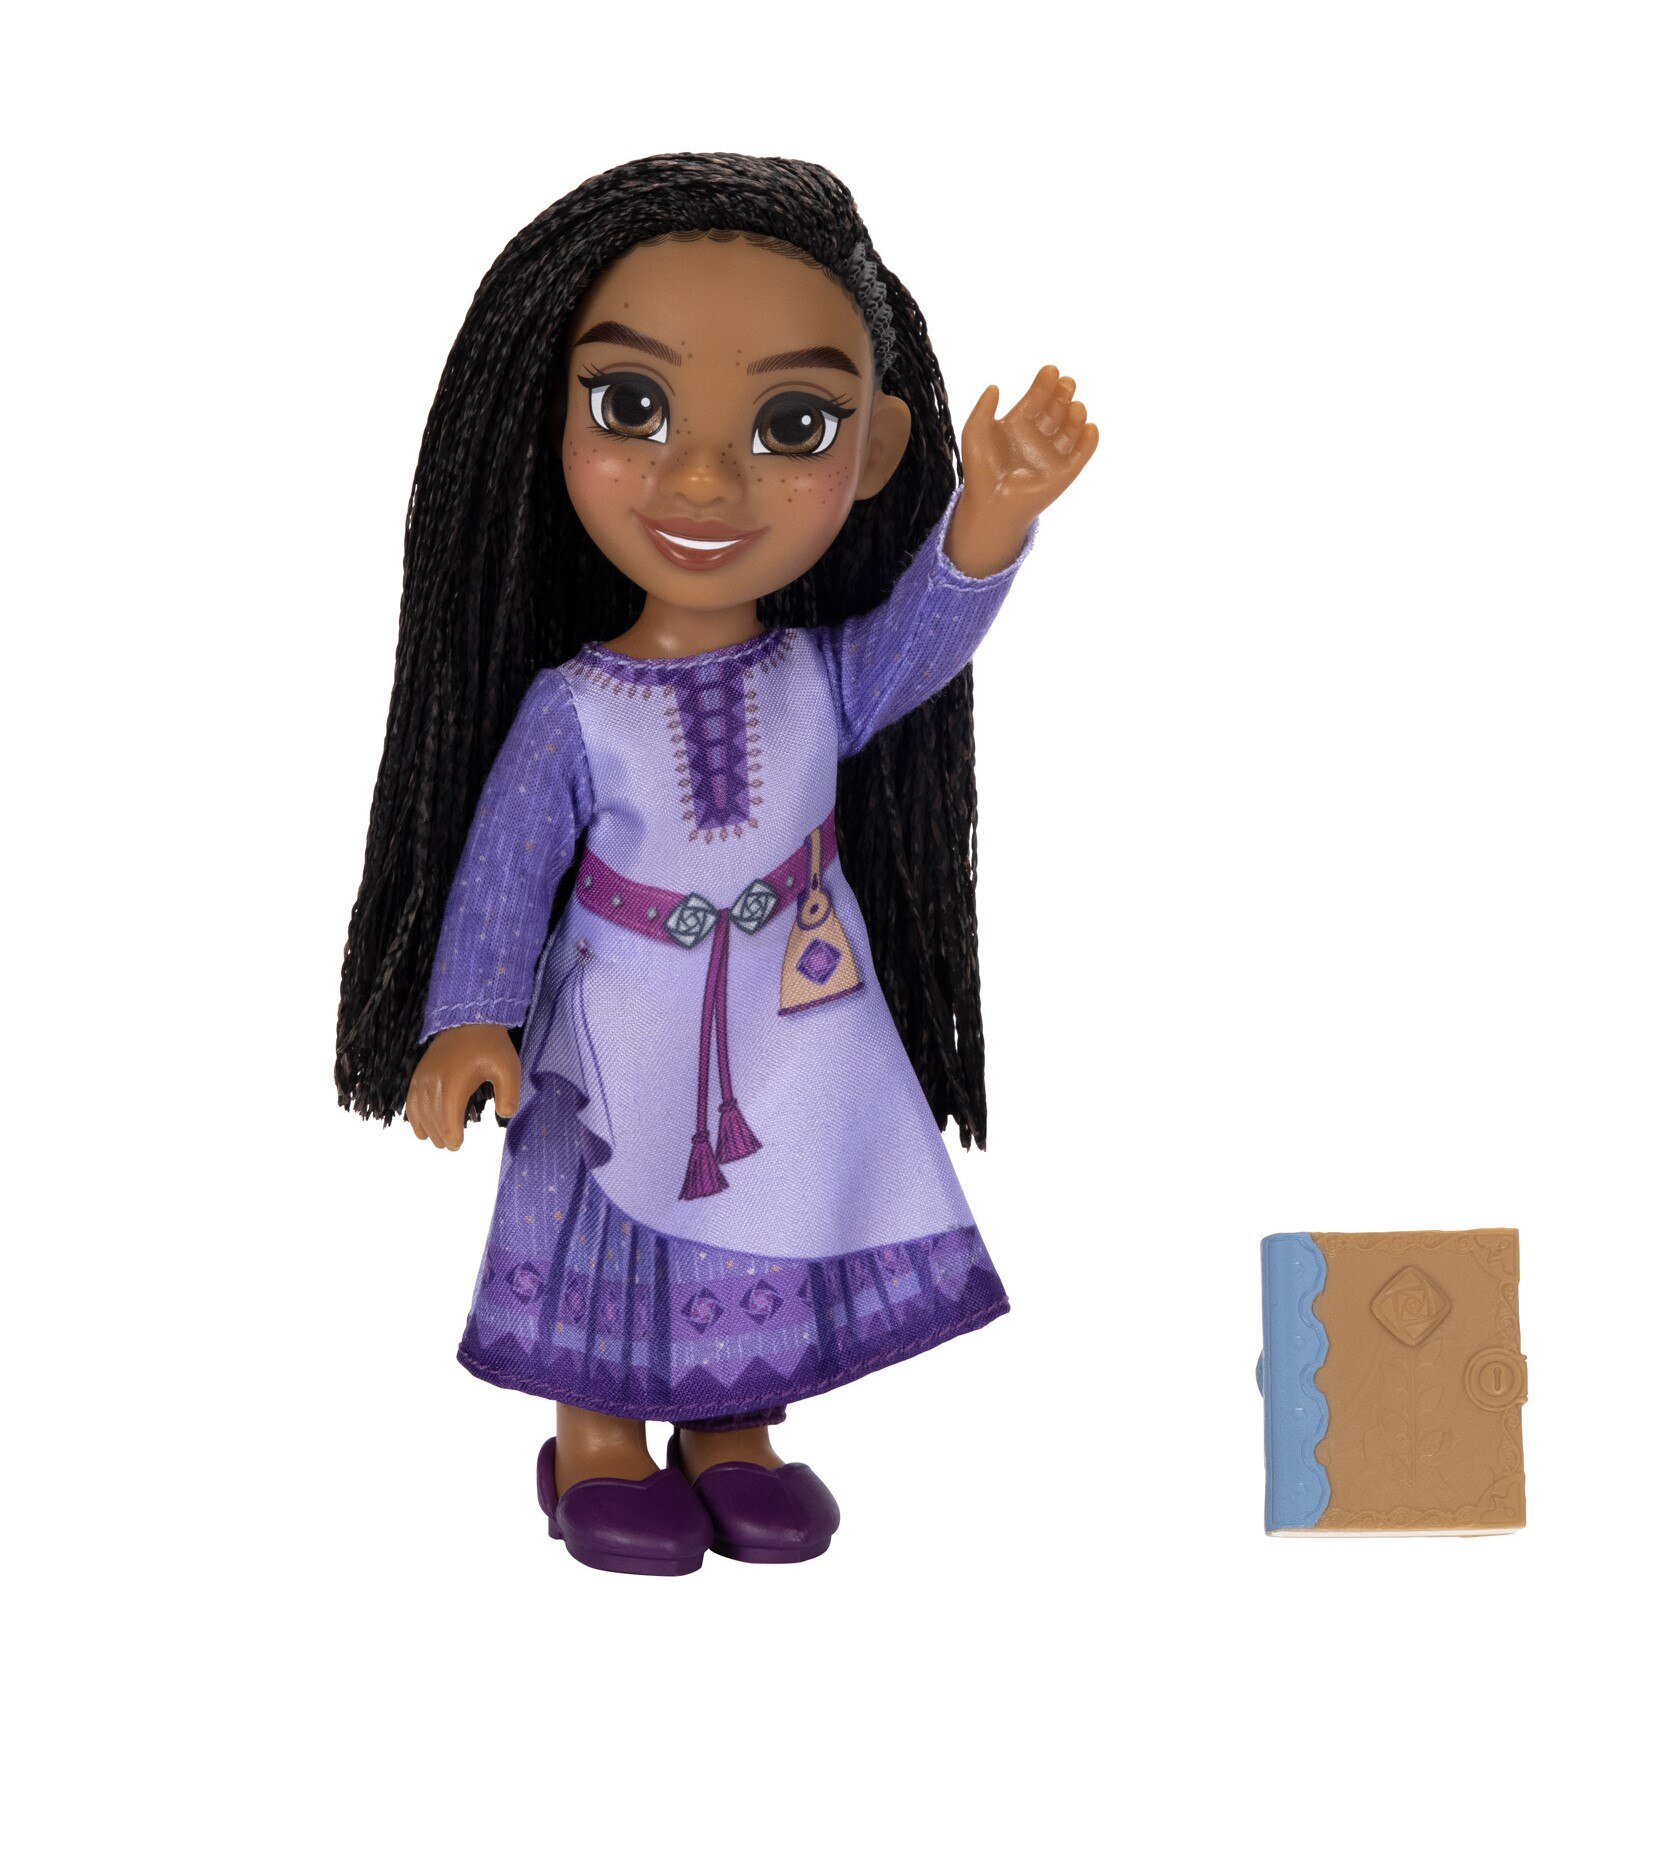 Disney Wish Star Reveals Small Doll Surprise Assortment